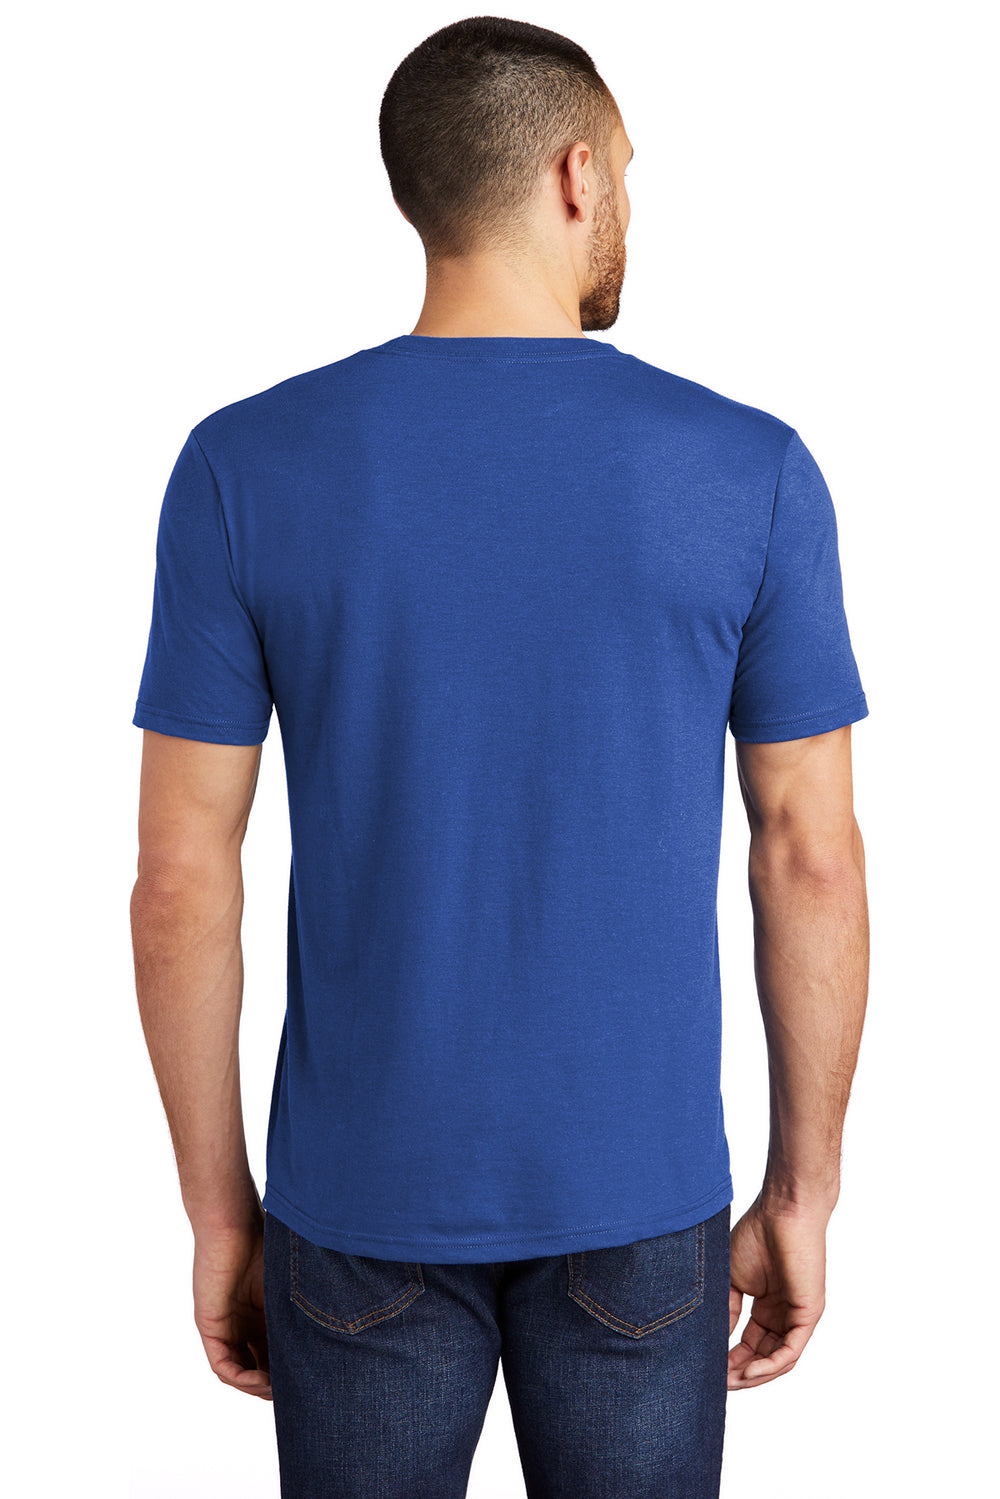 District DM130 Mens Perfect Tri Short Sleeve Crewneck T-Shirt Deep Royal Blue Back